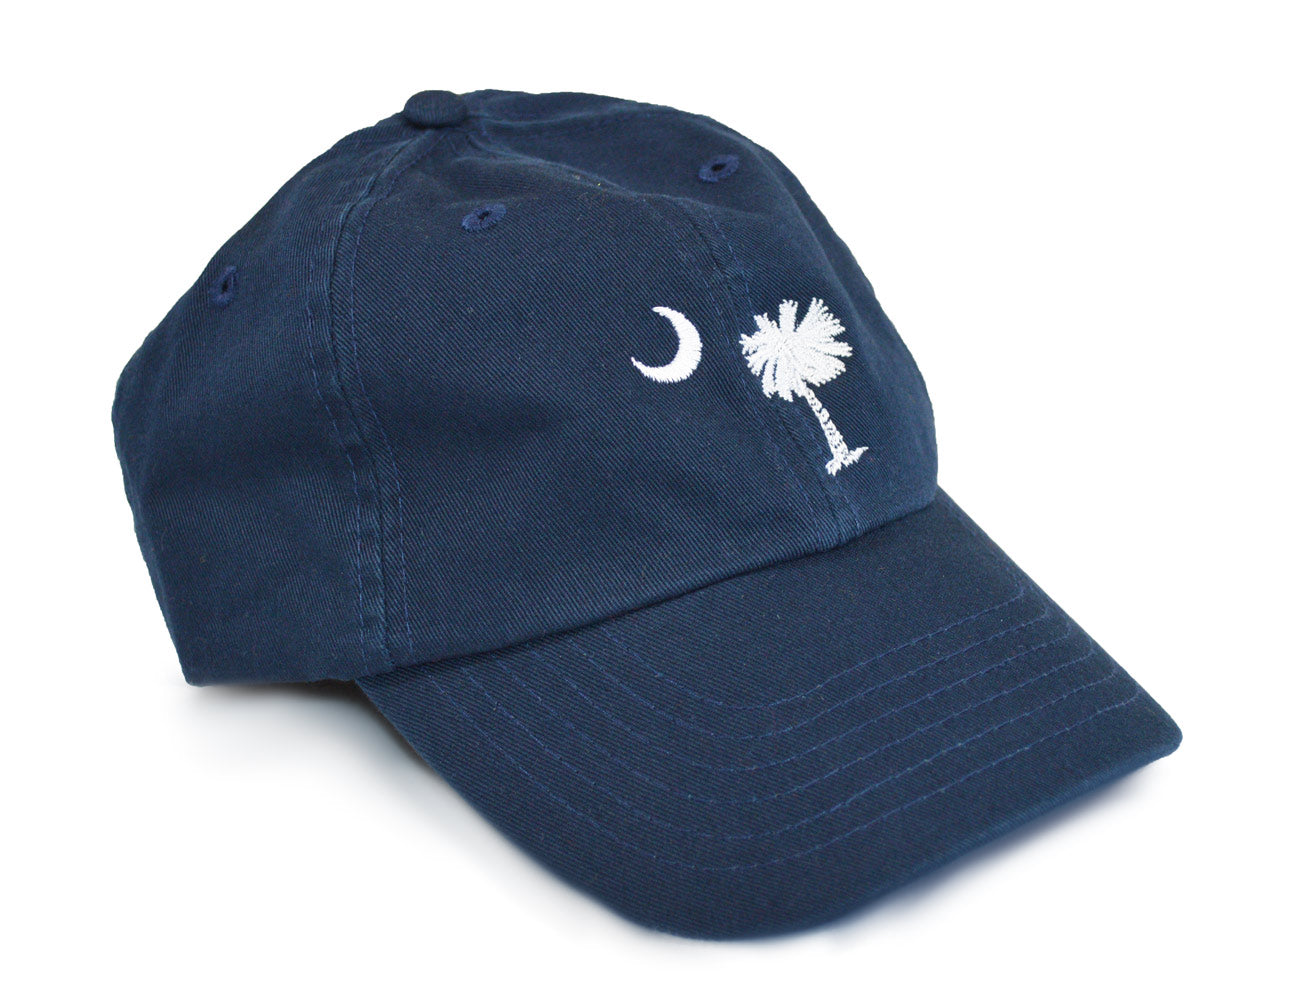 Ann Arbor T-shirt Company South Carolina State Flag Golf Hat